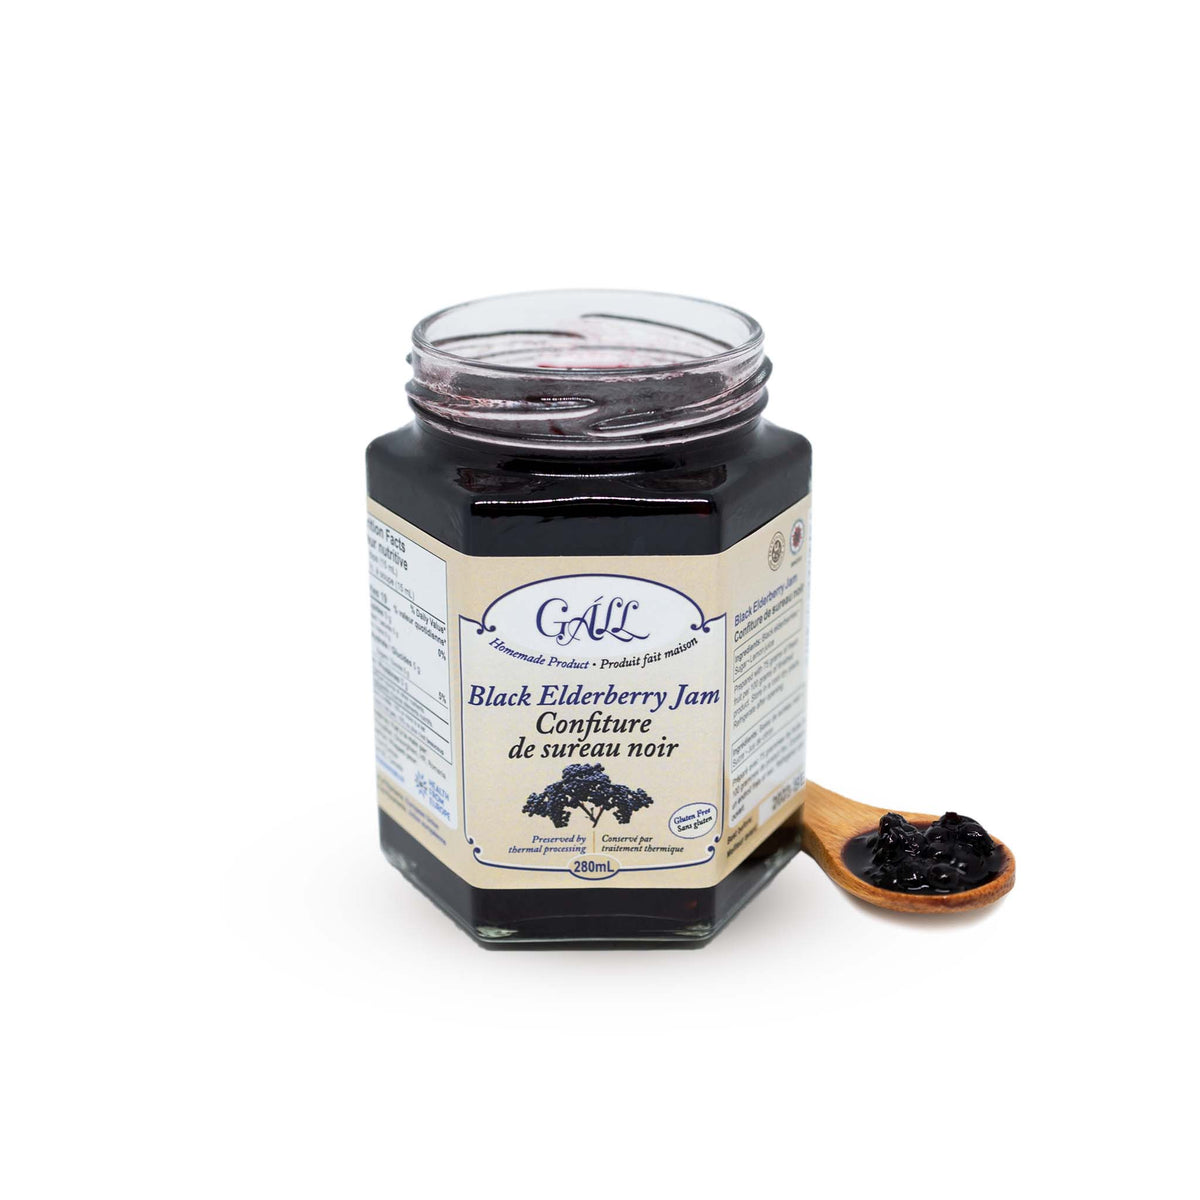 Artisanal Wild Elderberry Jam open jar spoon Health from Europe